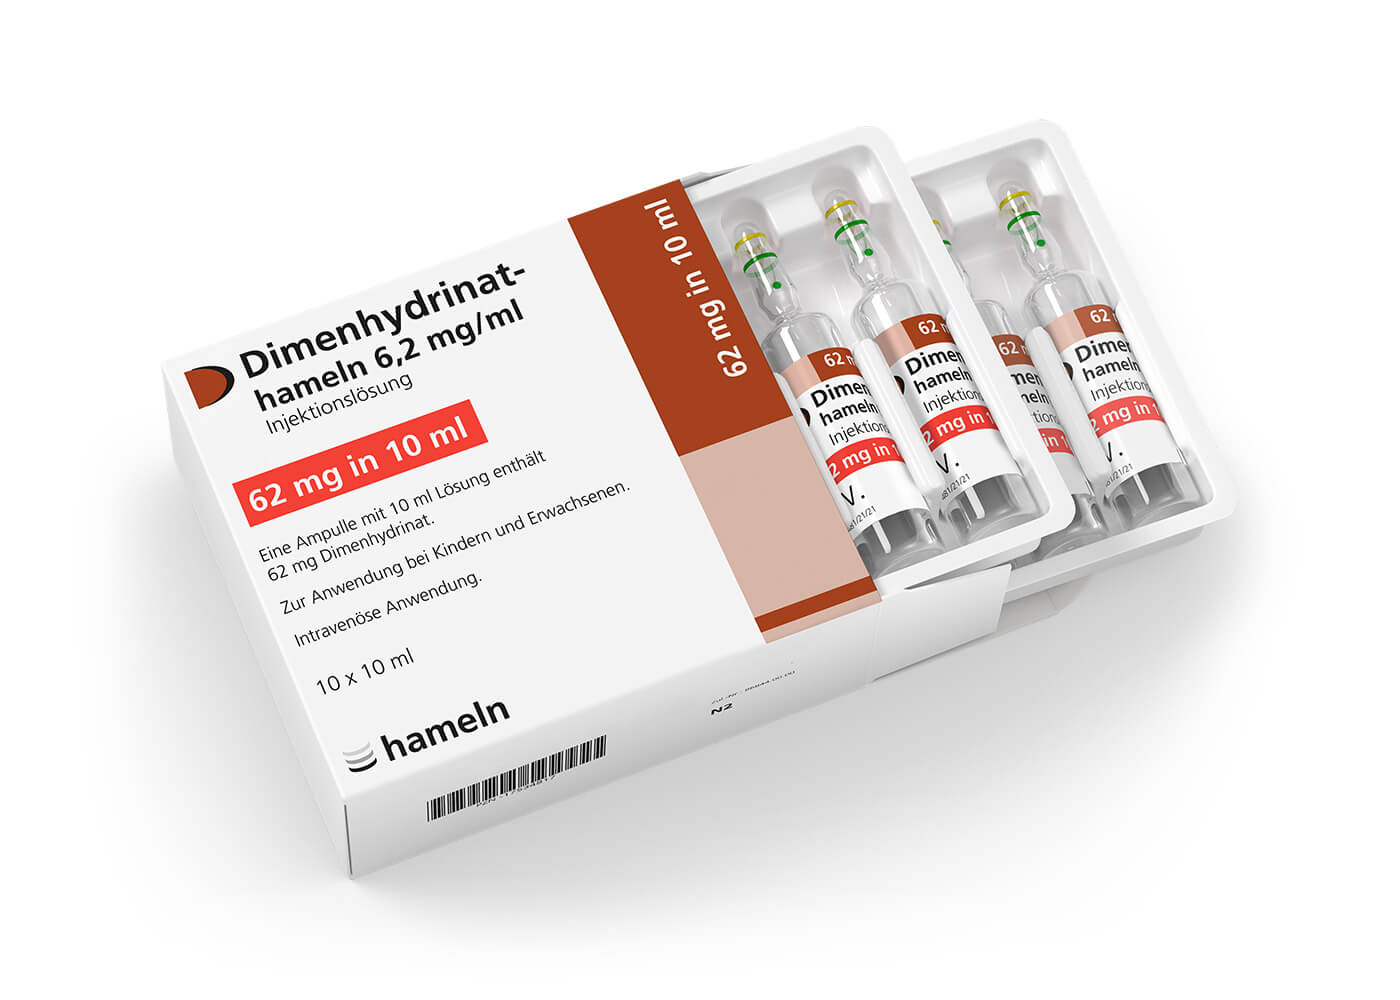 Dimenhydrinat_DE_6,2_mcg-ml_in_10_ml_Pack-Amp_10St_Hemo_2021-20